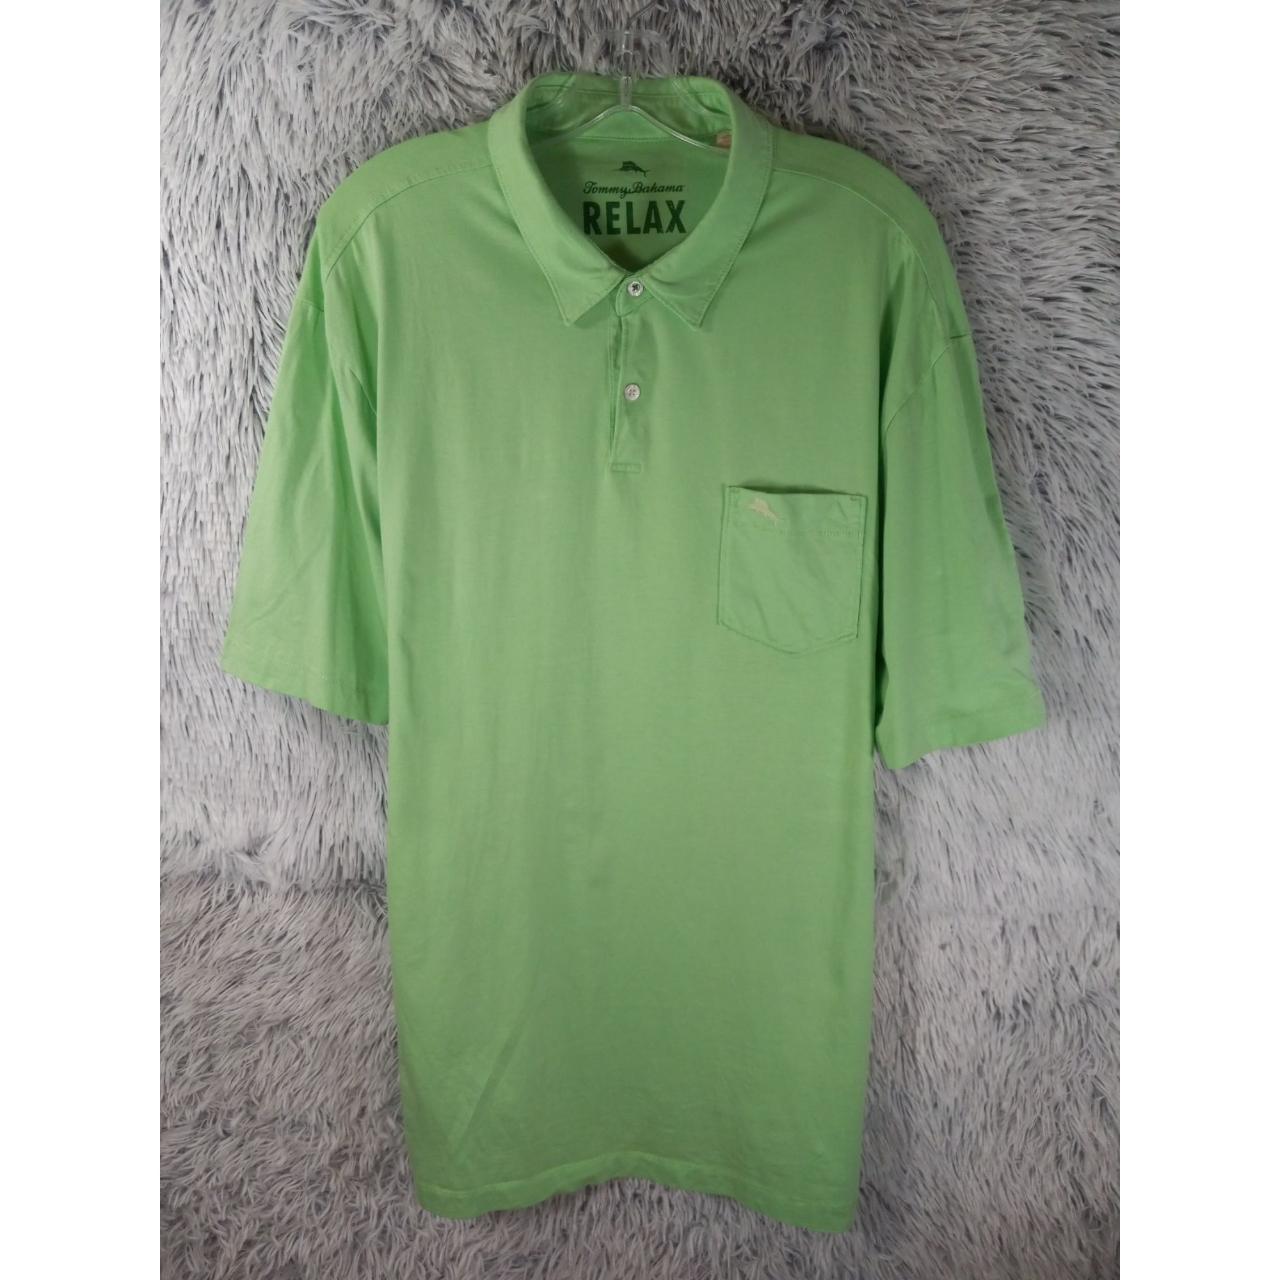 Tommy Bahama, Shirts, Tommy Bahama Golf Shirt Xl